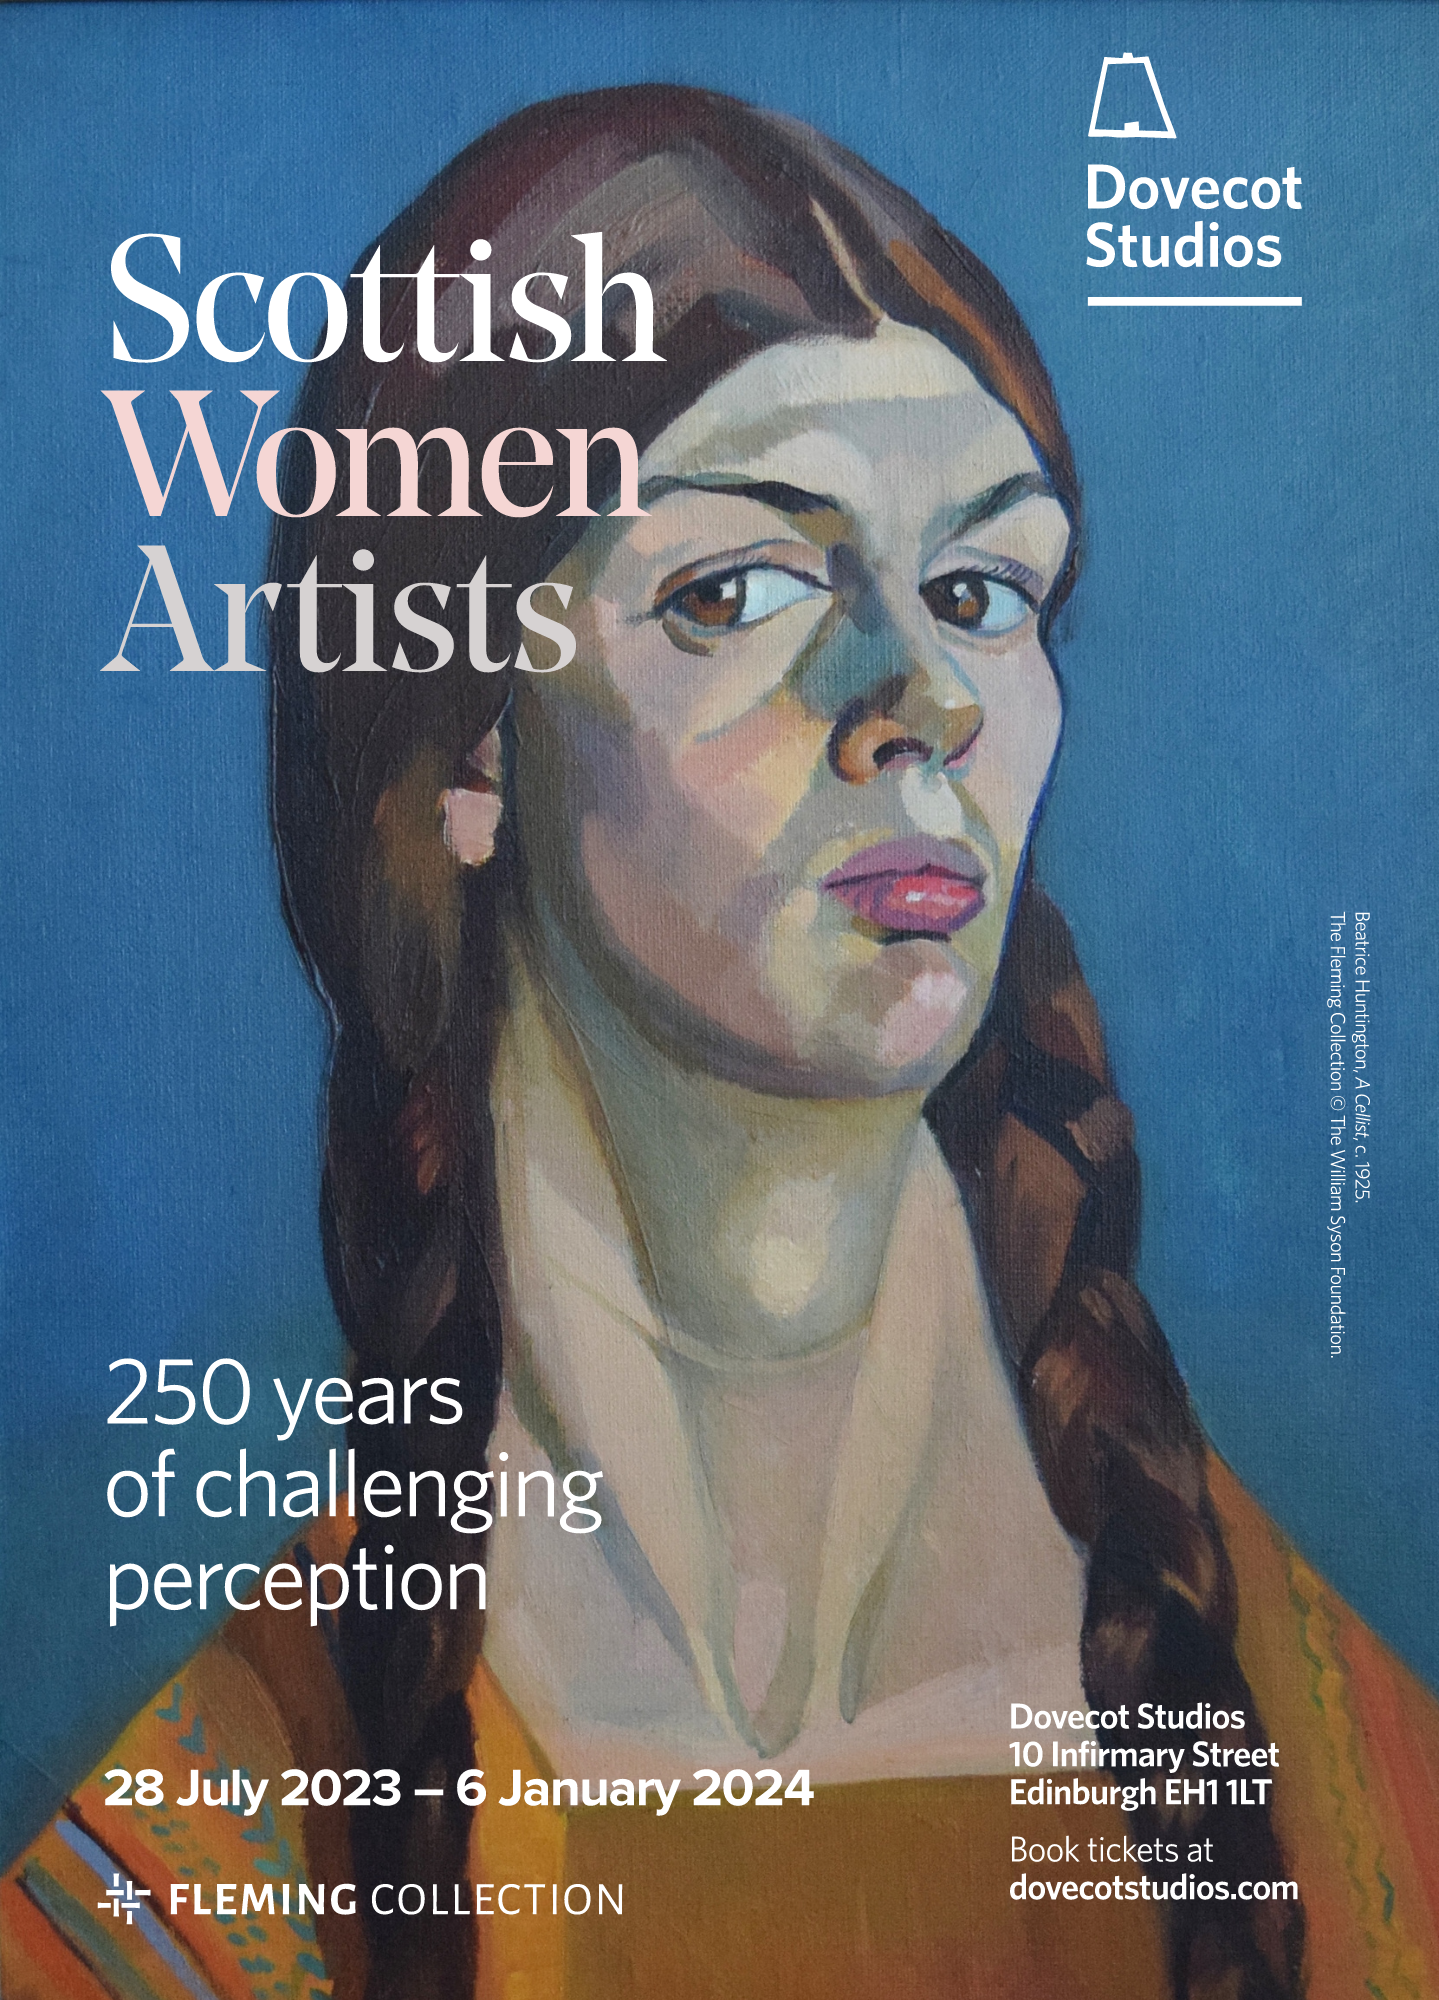 Exhibition Poster: Scottish Women Artists - A3